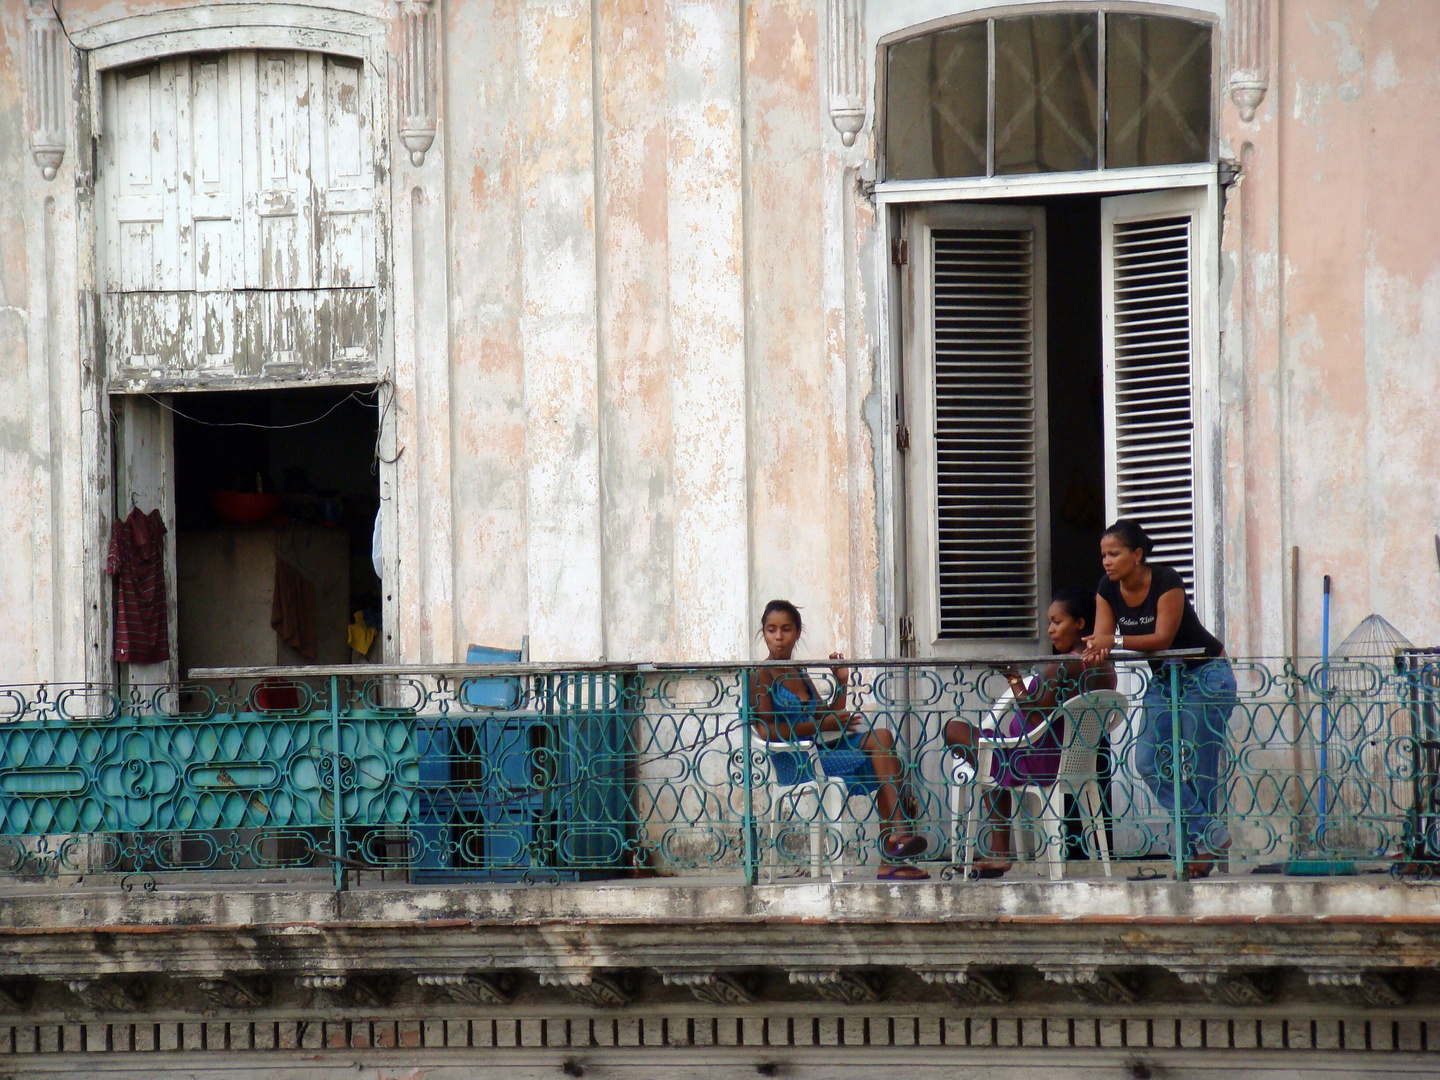 Cuba,Kuba, neugierig sein